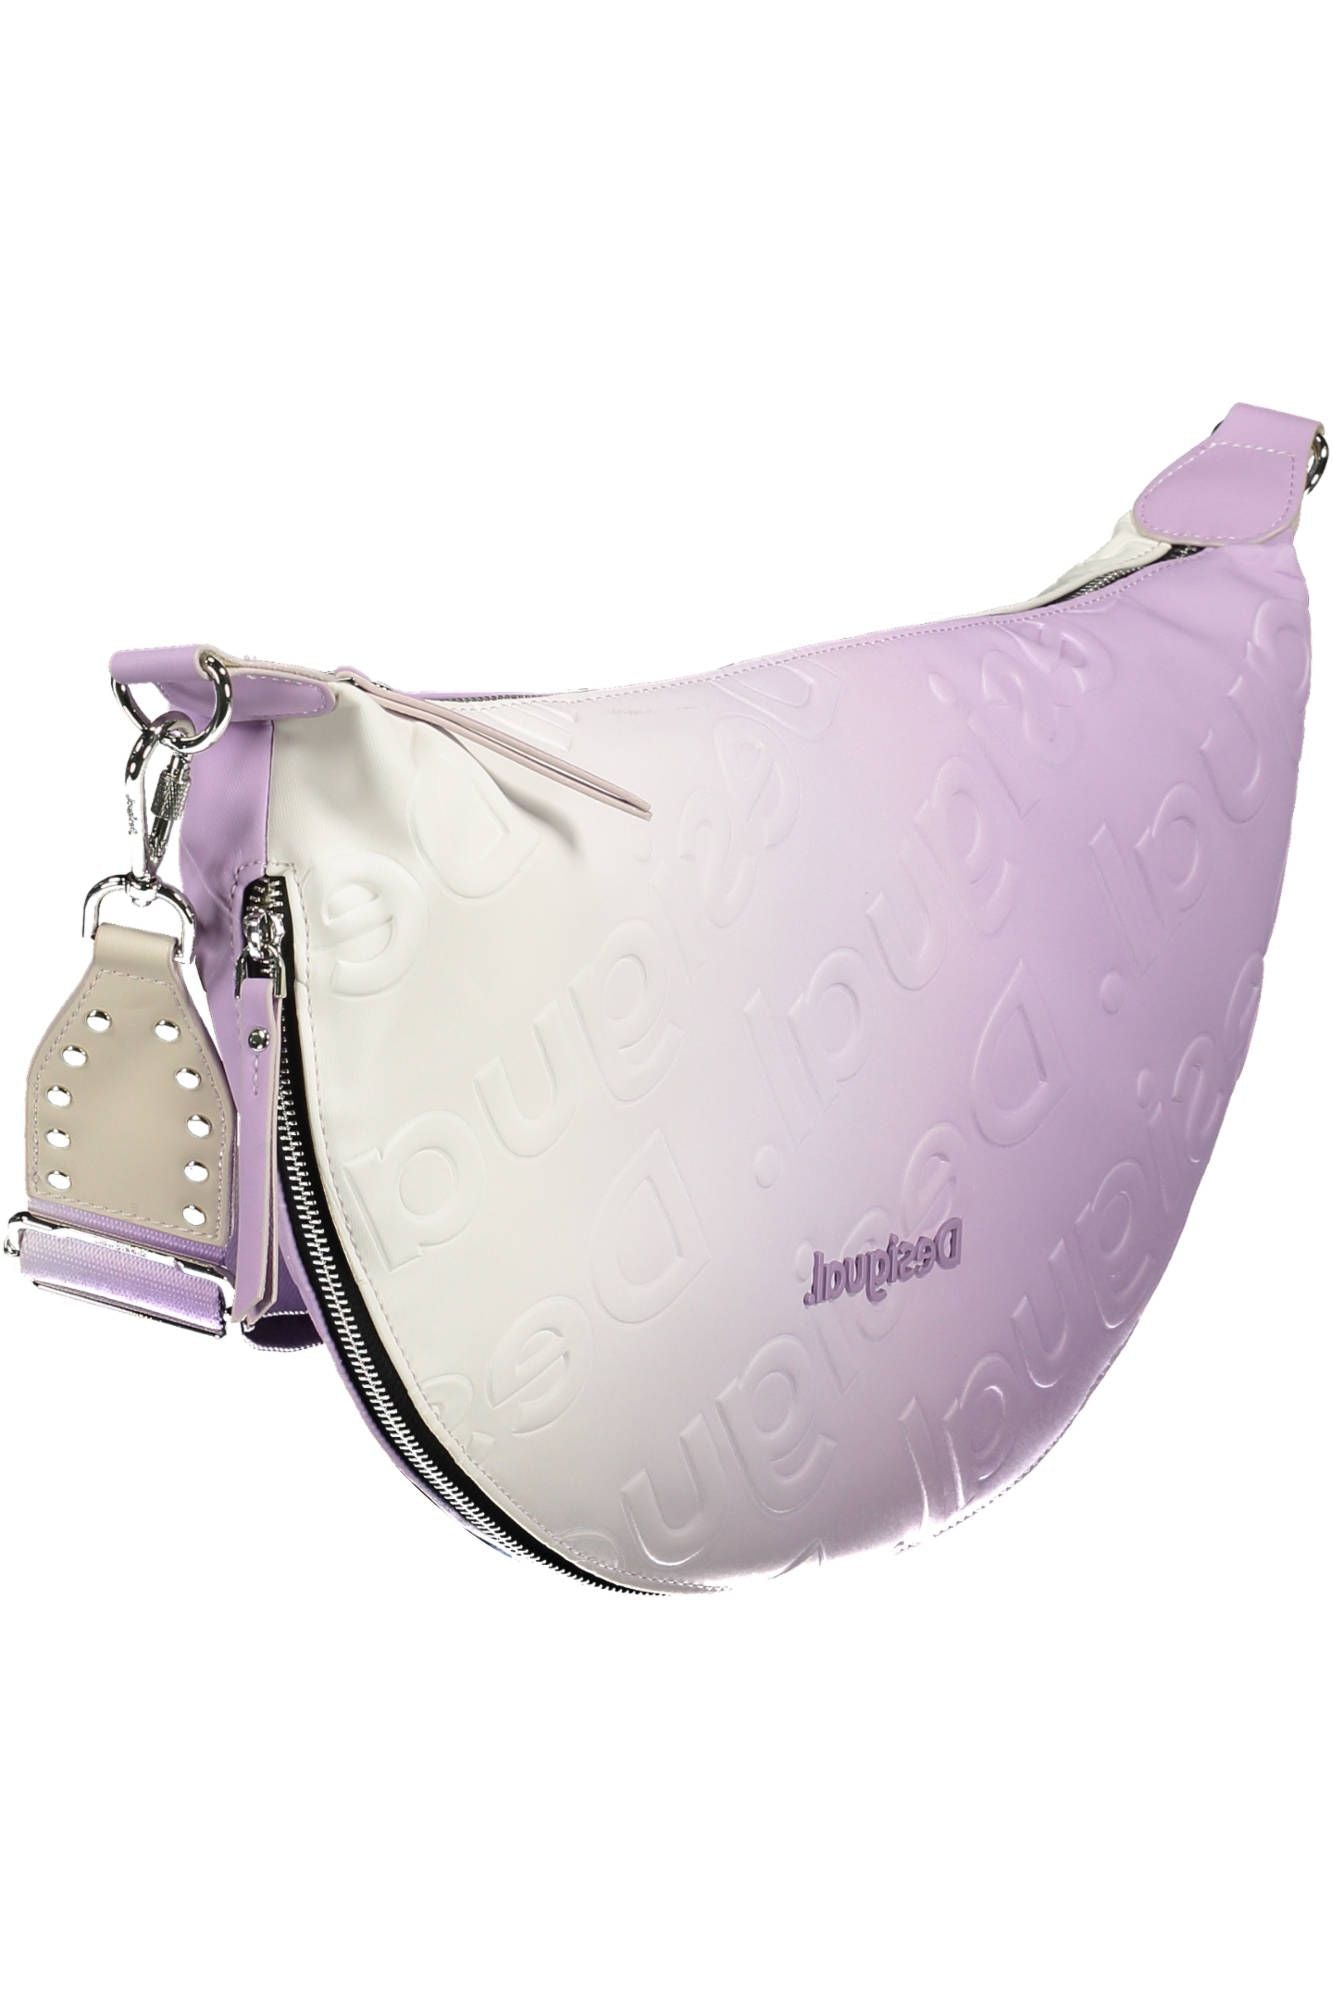 Desigual Elegant Purple Expandable Handbag with Contrasting Details